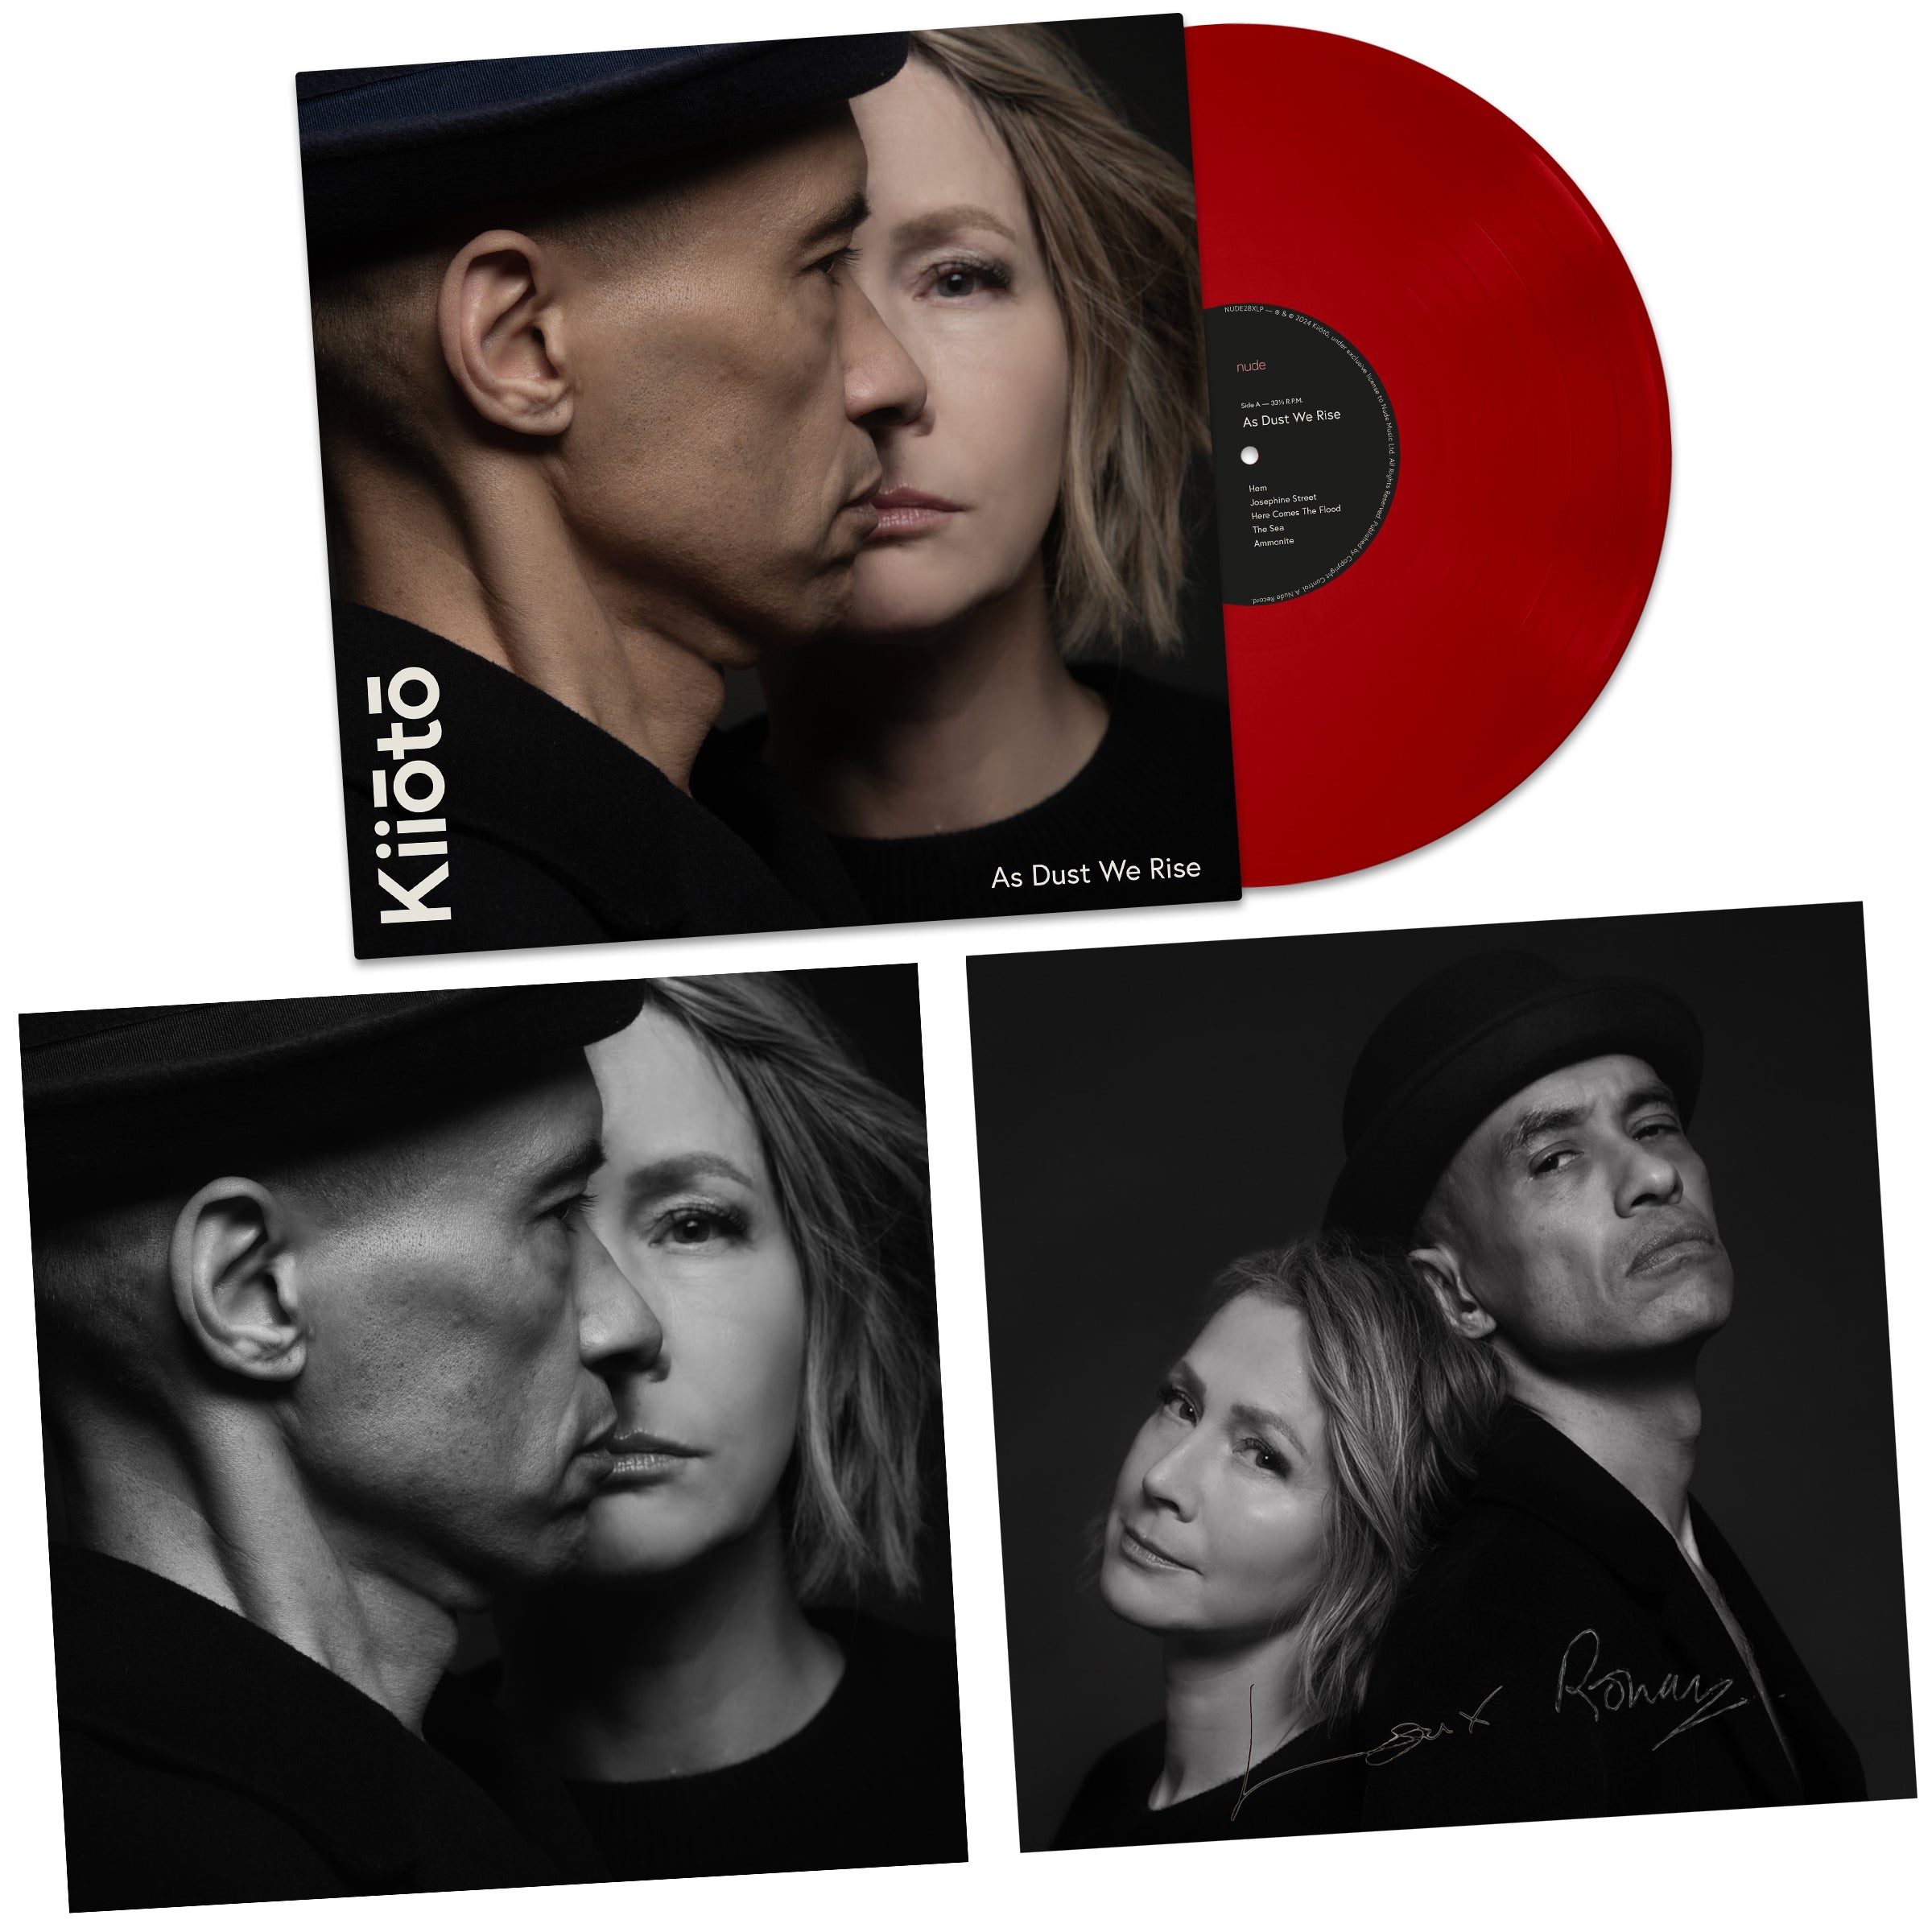 Kïïōtō - As Dust We Rise: Limited Red Vinyl LP w/ Insert + Signed & Numbered Art Print